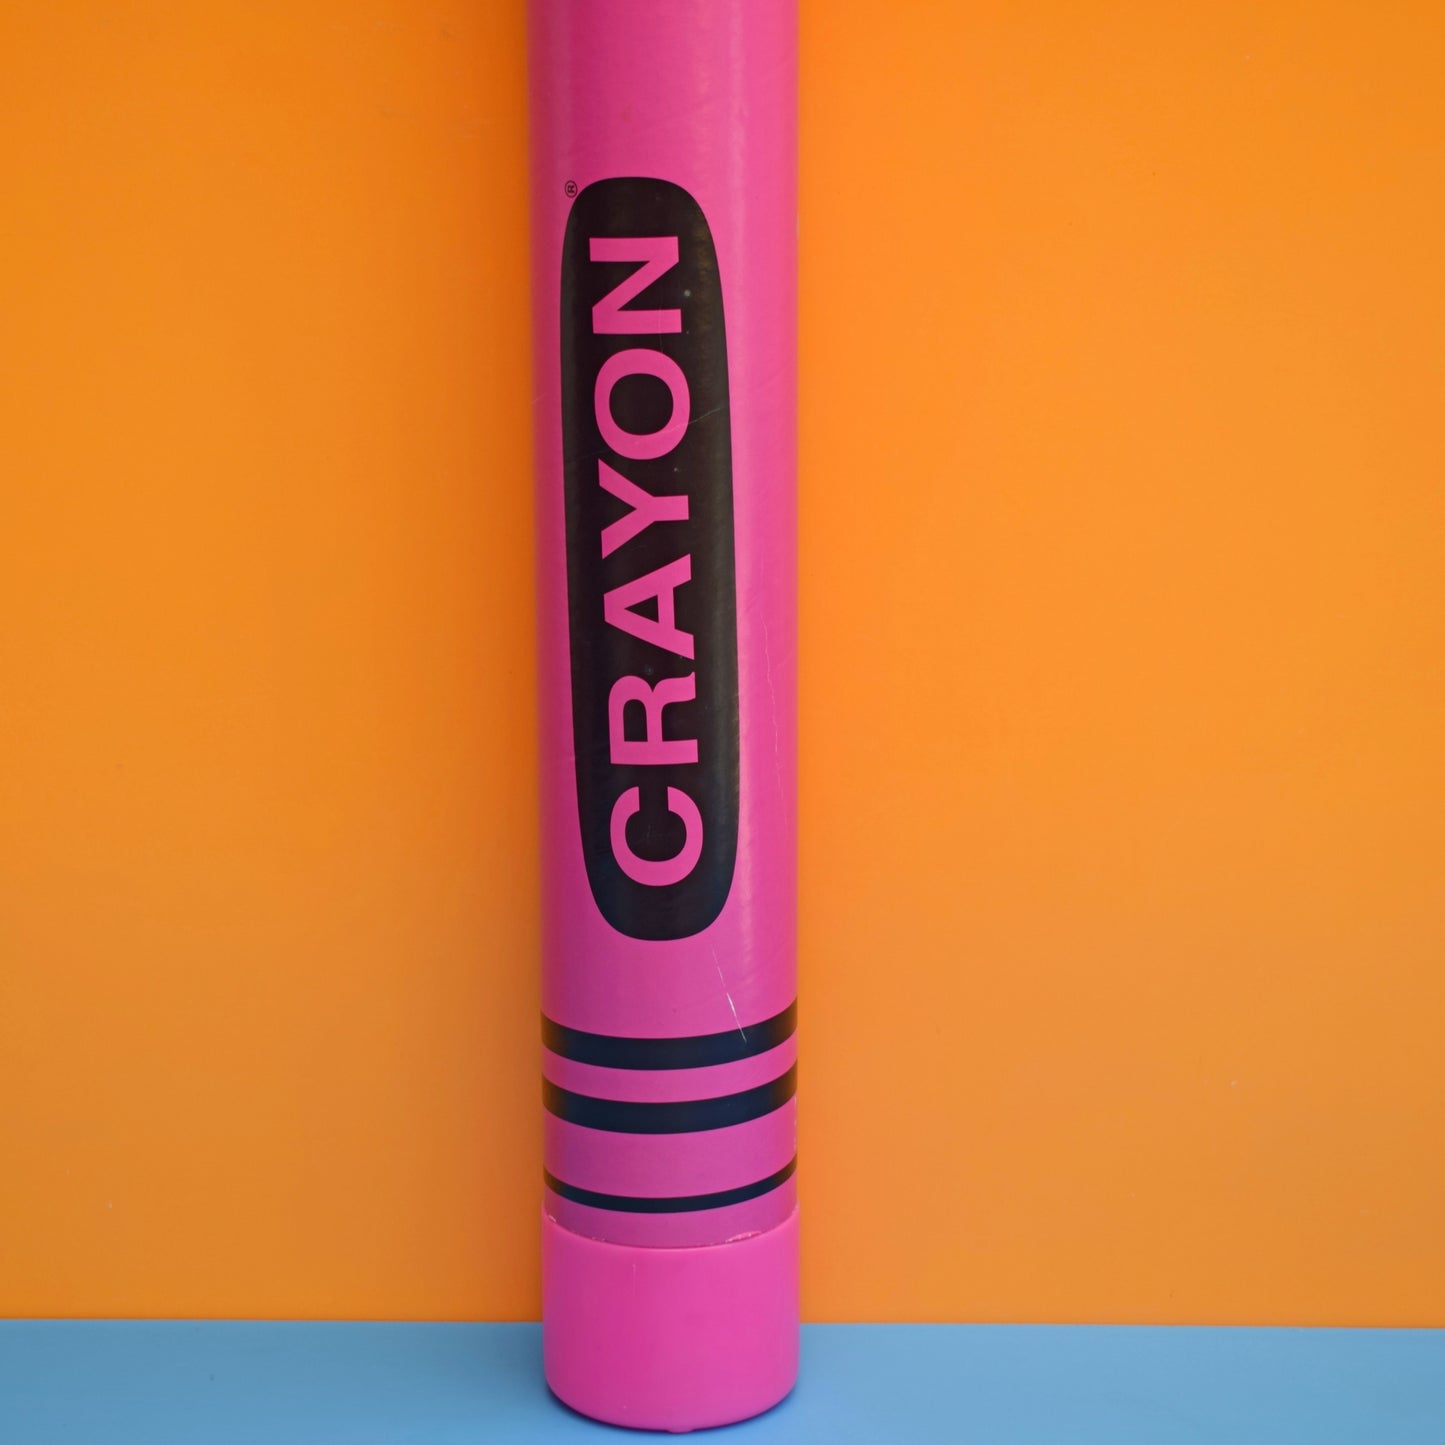 Copy of Vintage 1980s Oversized Crayon Money Box - Pop Art - Unused